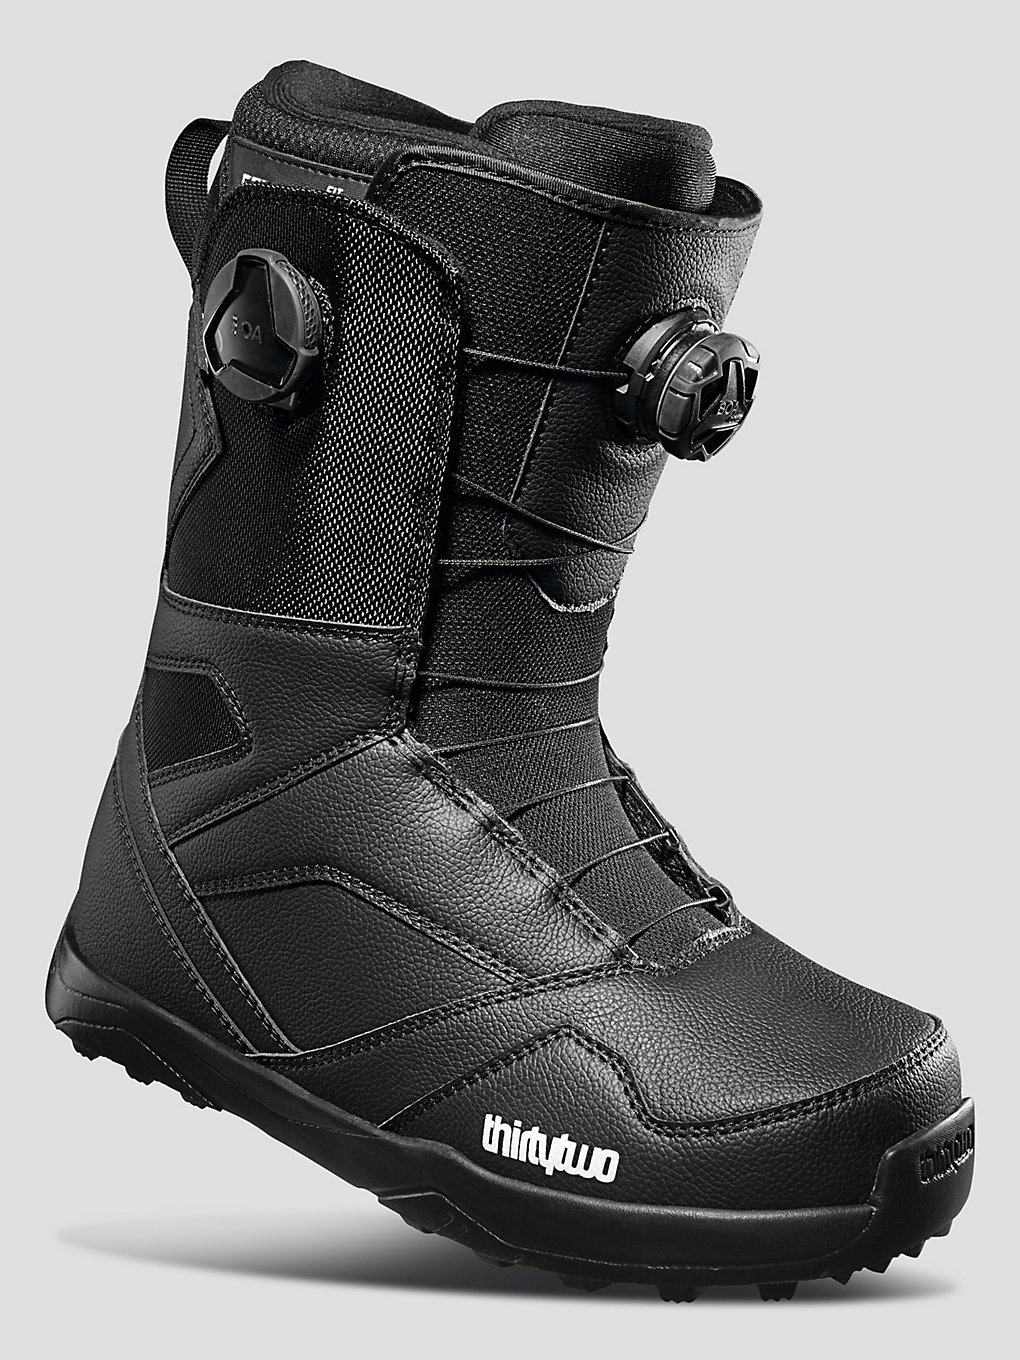 ThirtyTwo STW Double BOA Snowboard Boots black kaufen